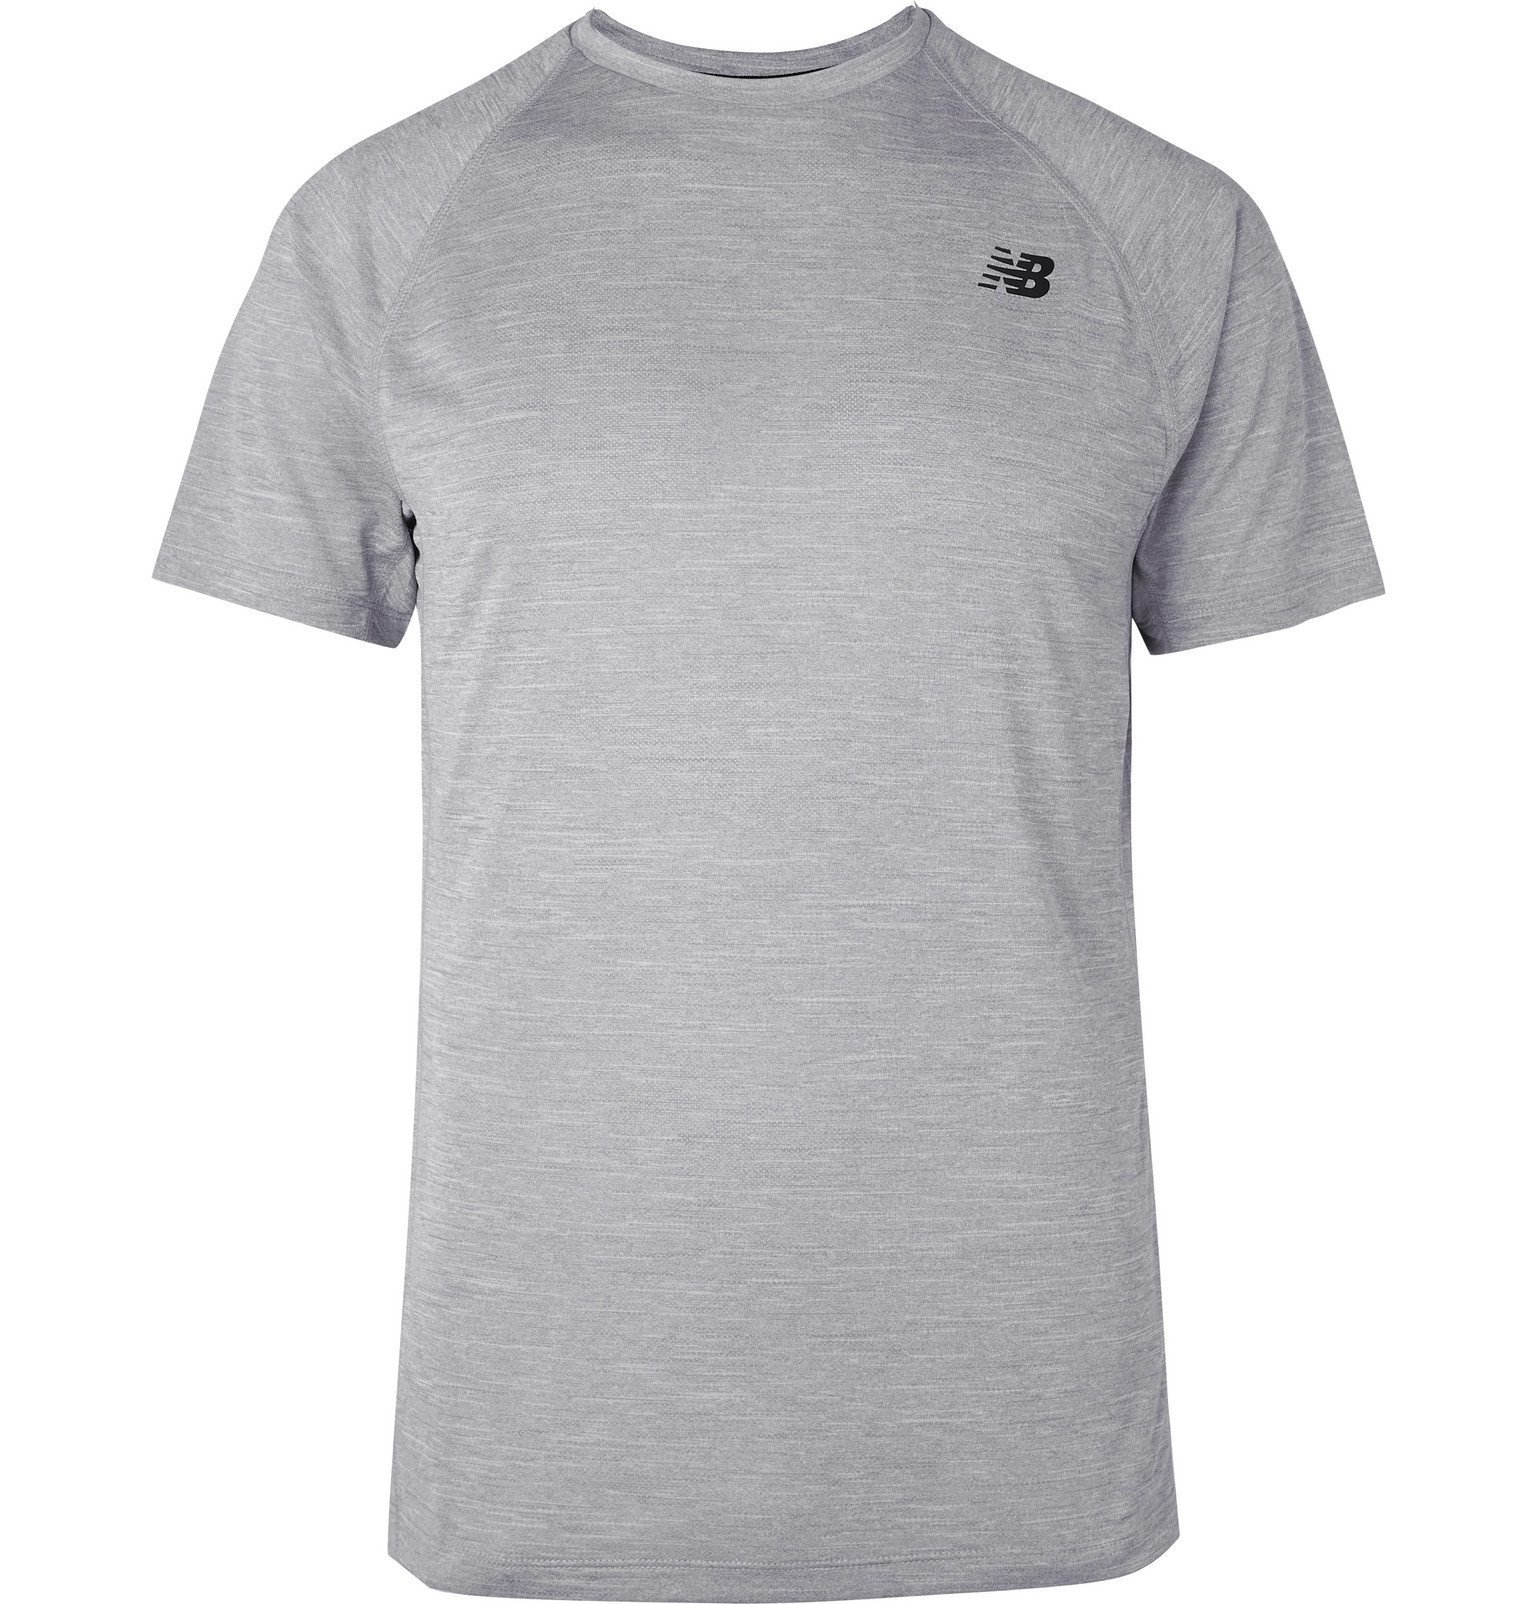 New Balance - Tenacity Mélange Stretch-Jersey T-Shirt - Gray